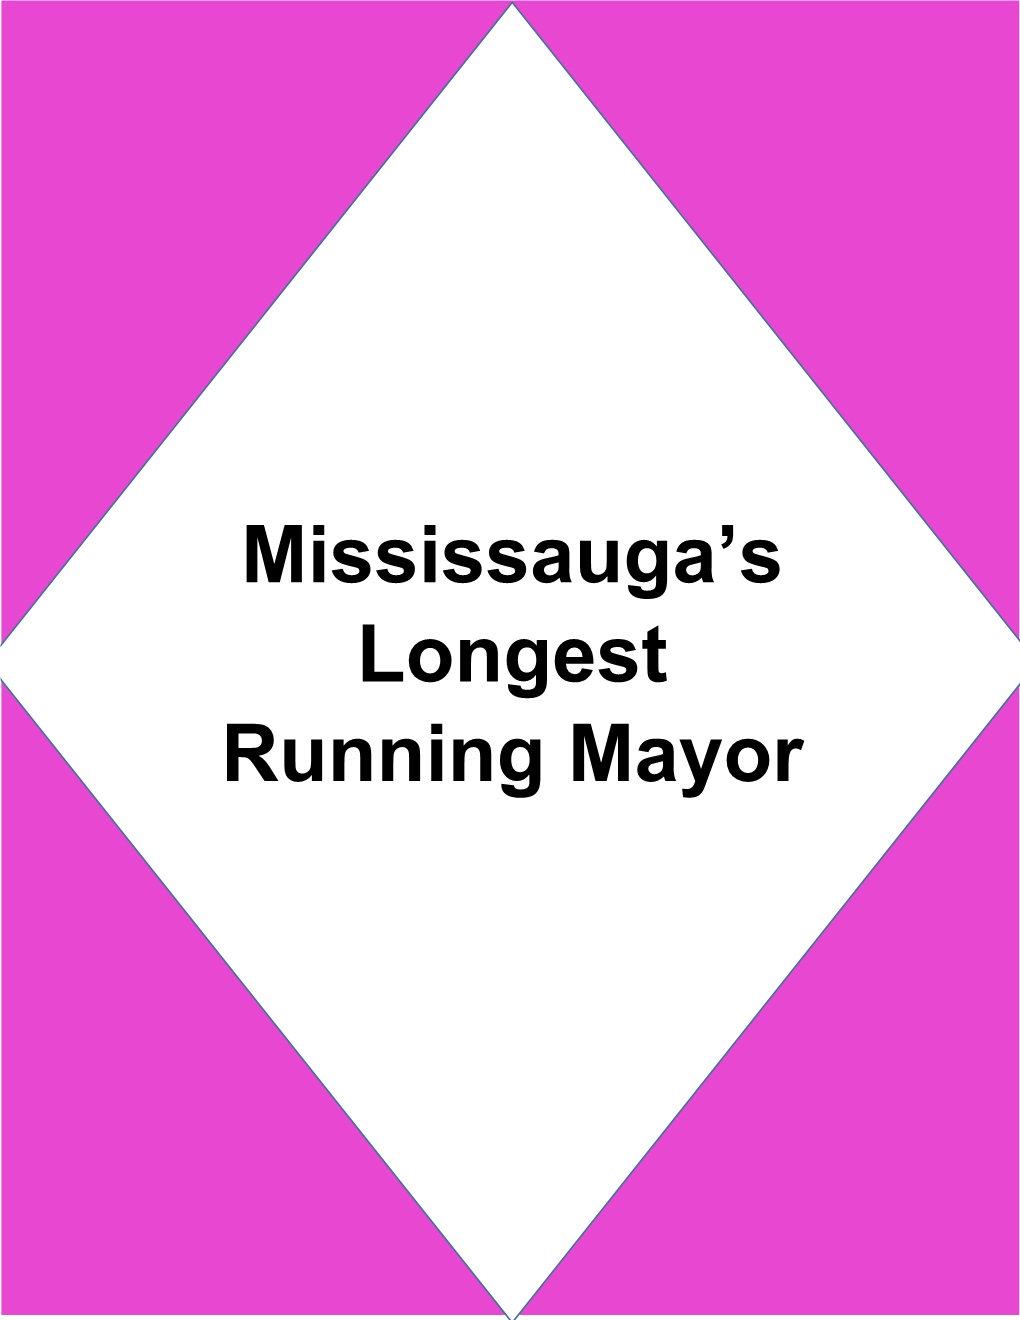 Mississauga's Longest Running Mayor